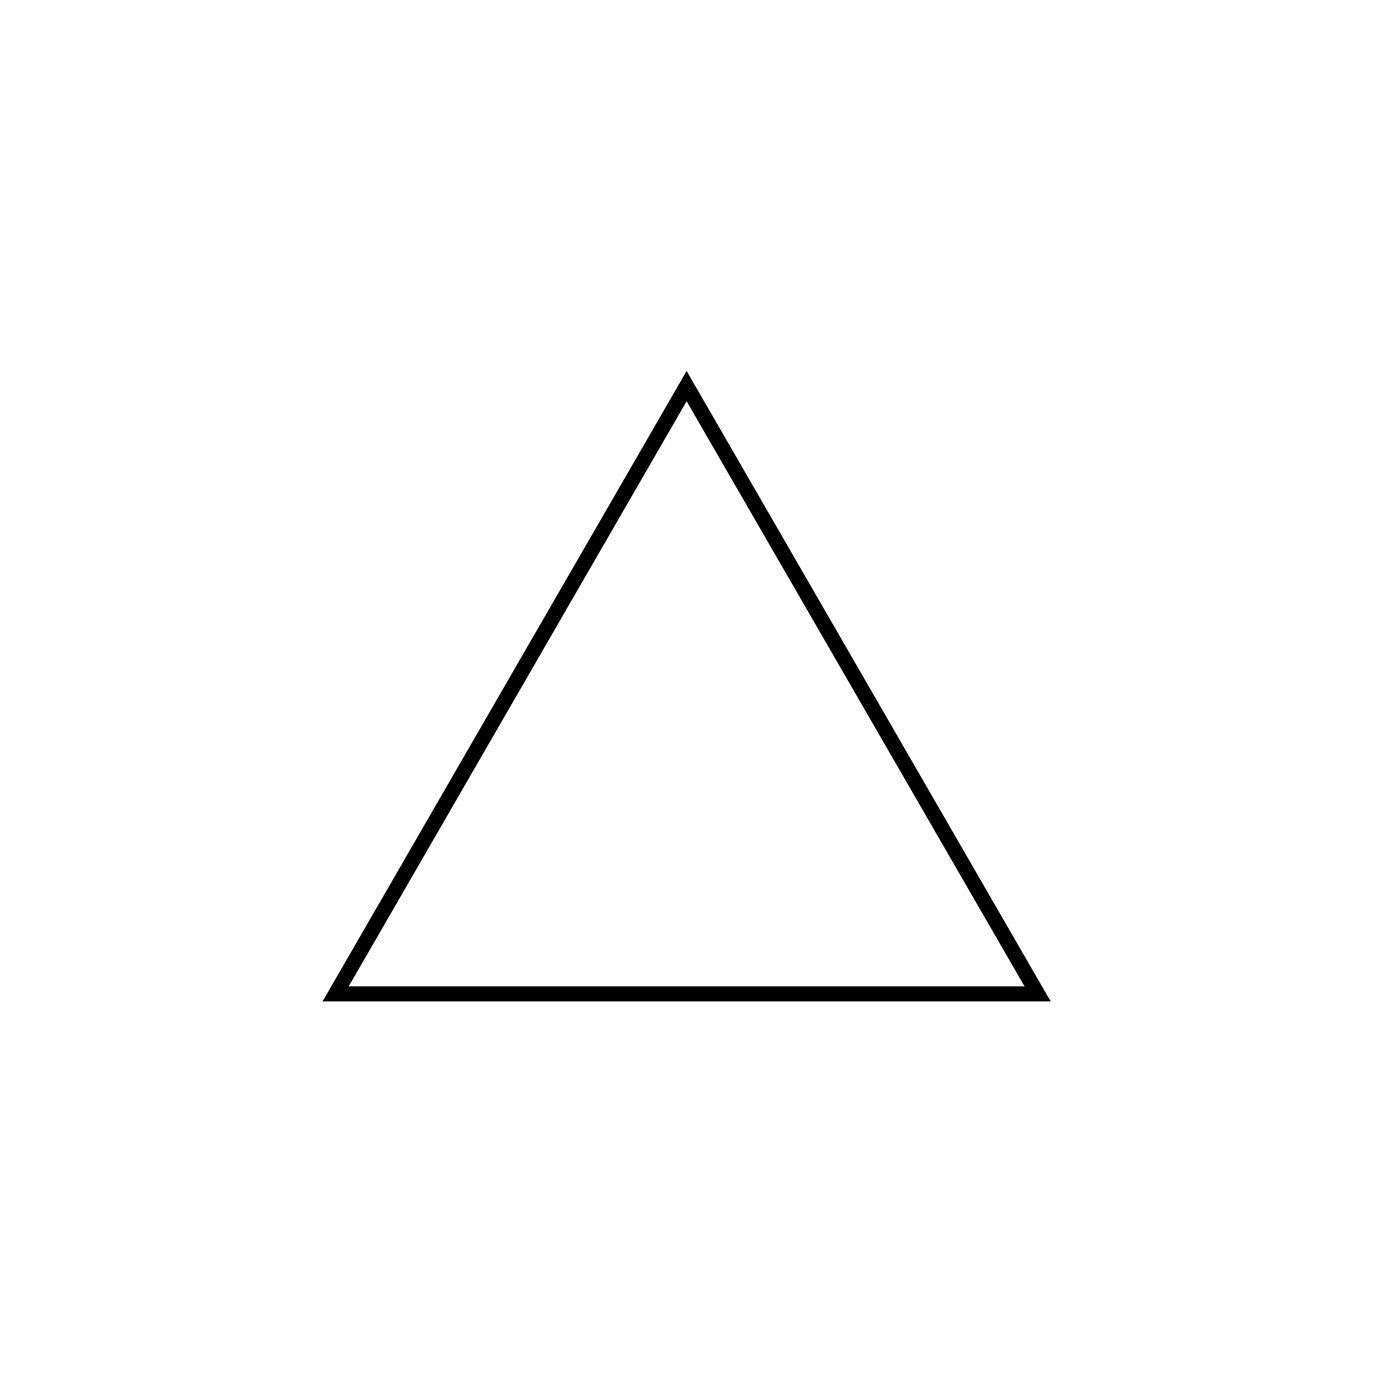 Triangle pattern on Behance